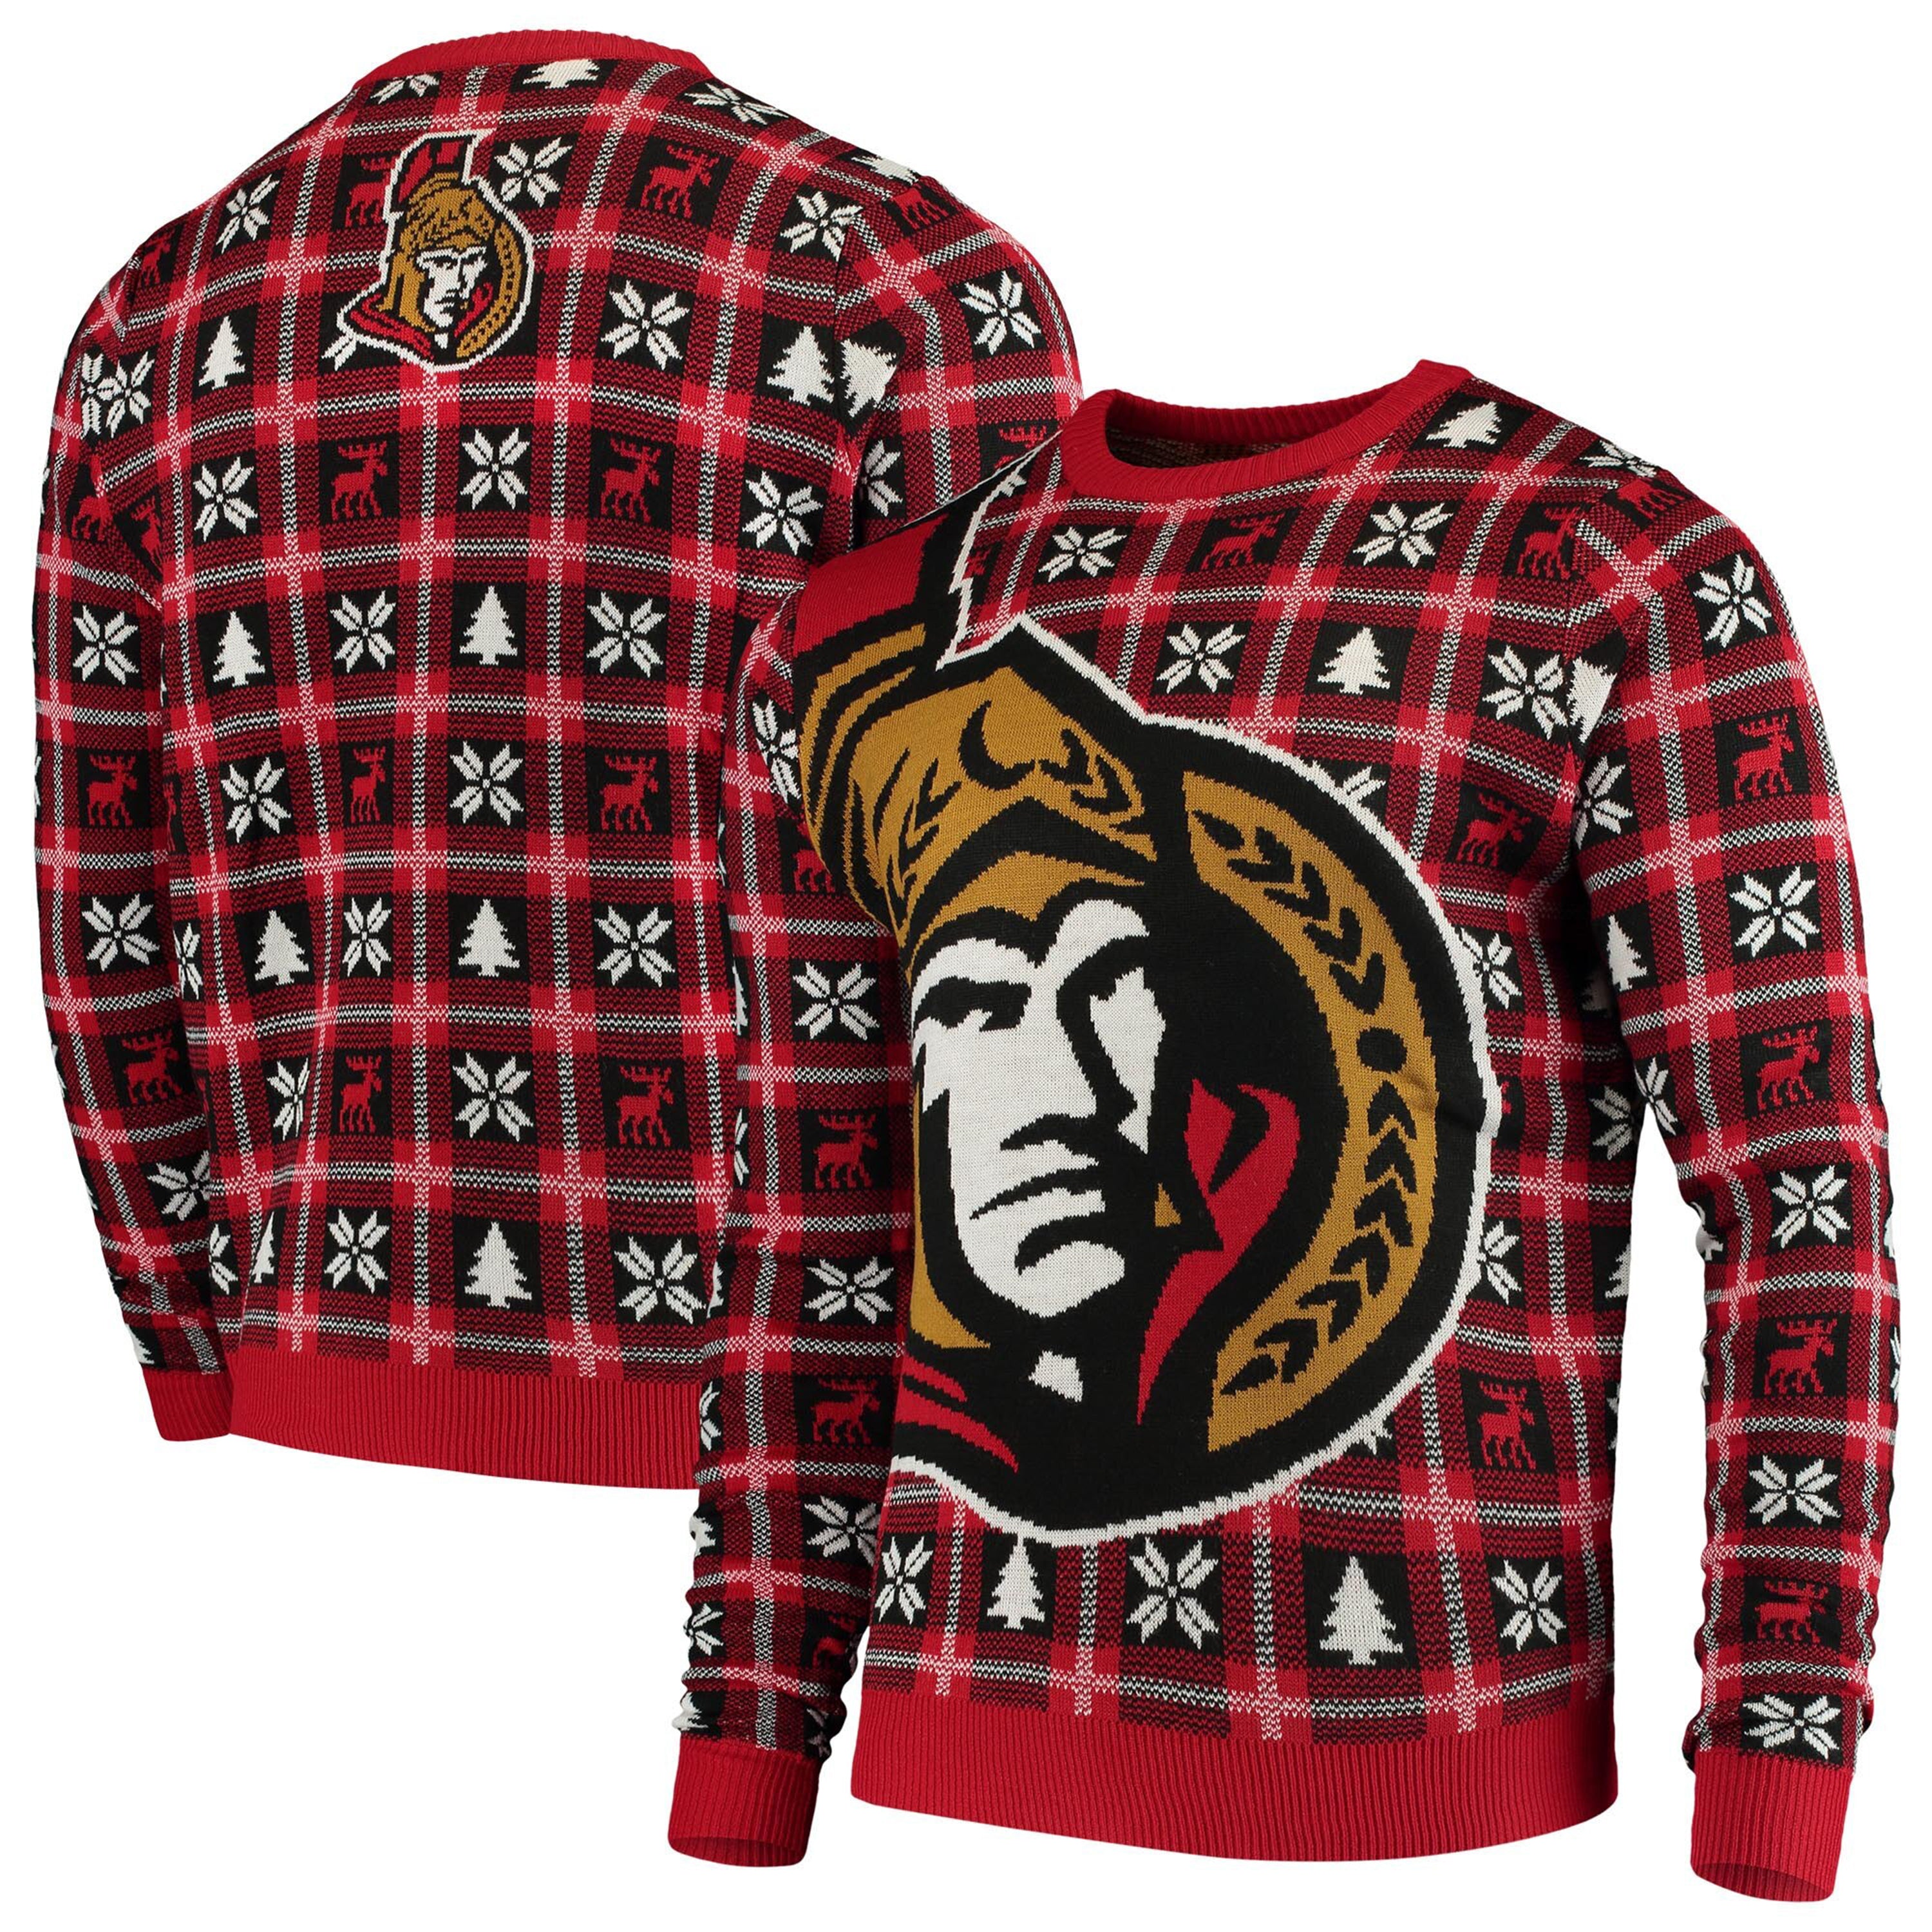 NHL Fanatics Branded Christmas Jumper Graphic Crew Sweatshirt - Mens